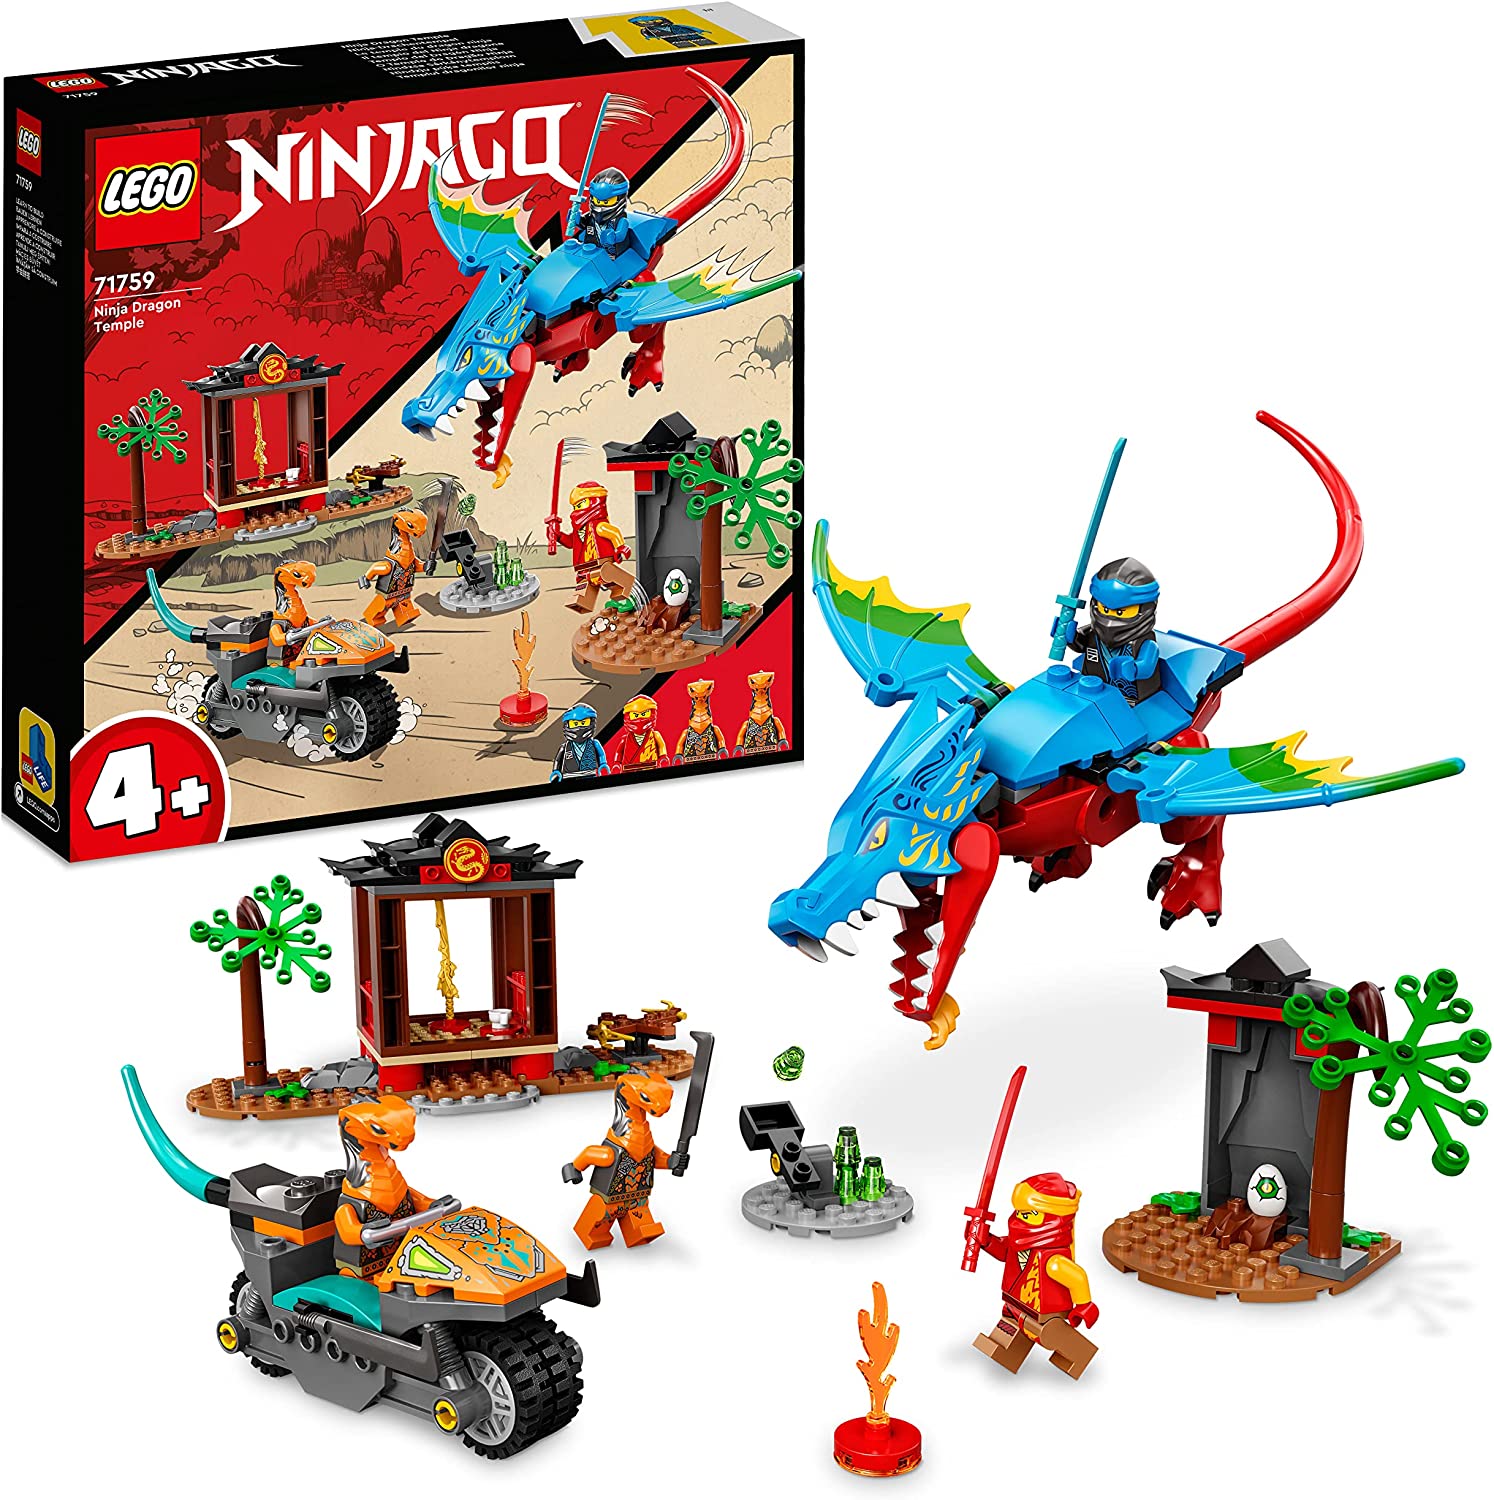 LEGO 71759 NINJAGO Dragon Temple Set with Toy Motorcycle, 4 Mini Figures Including Kai and NYA, Dragon and Snake Figures